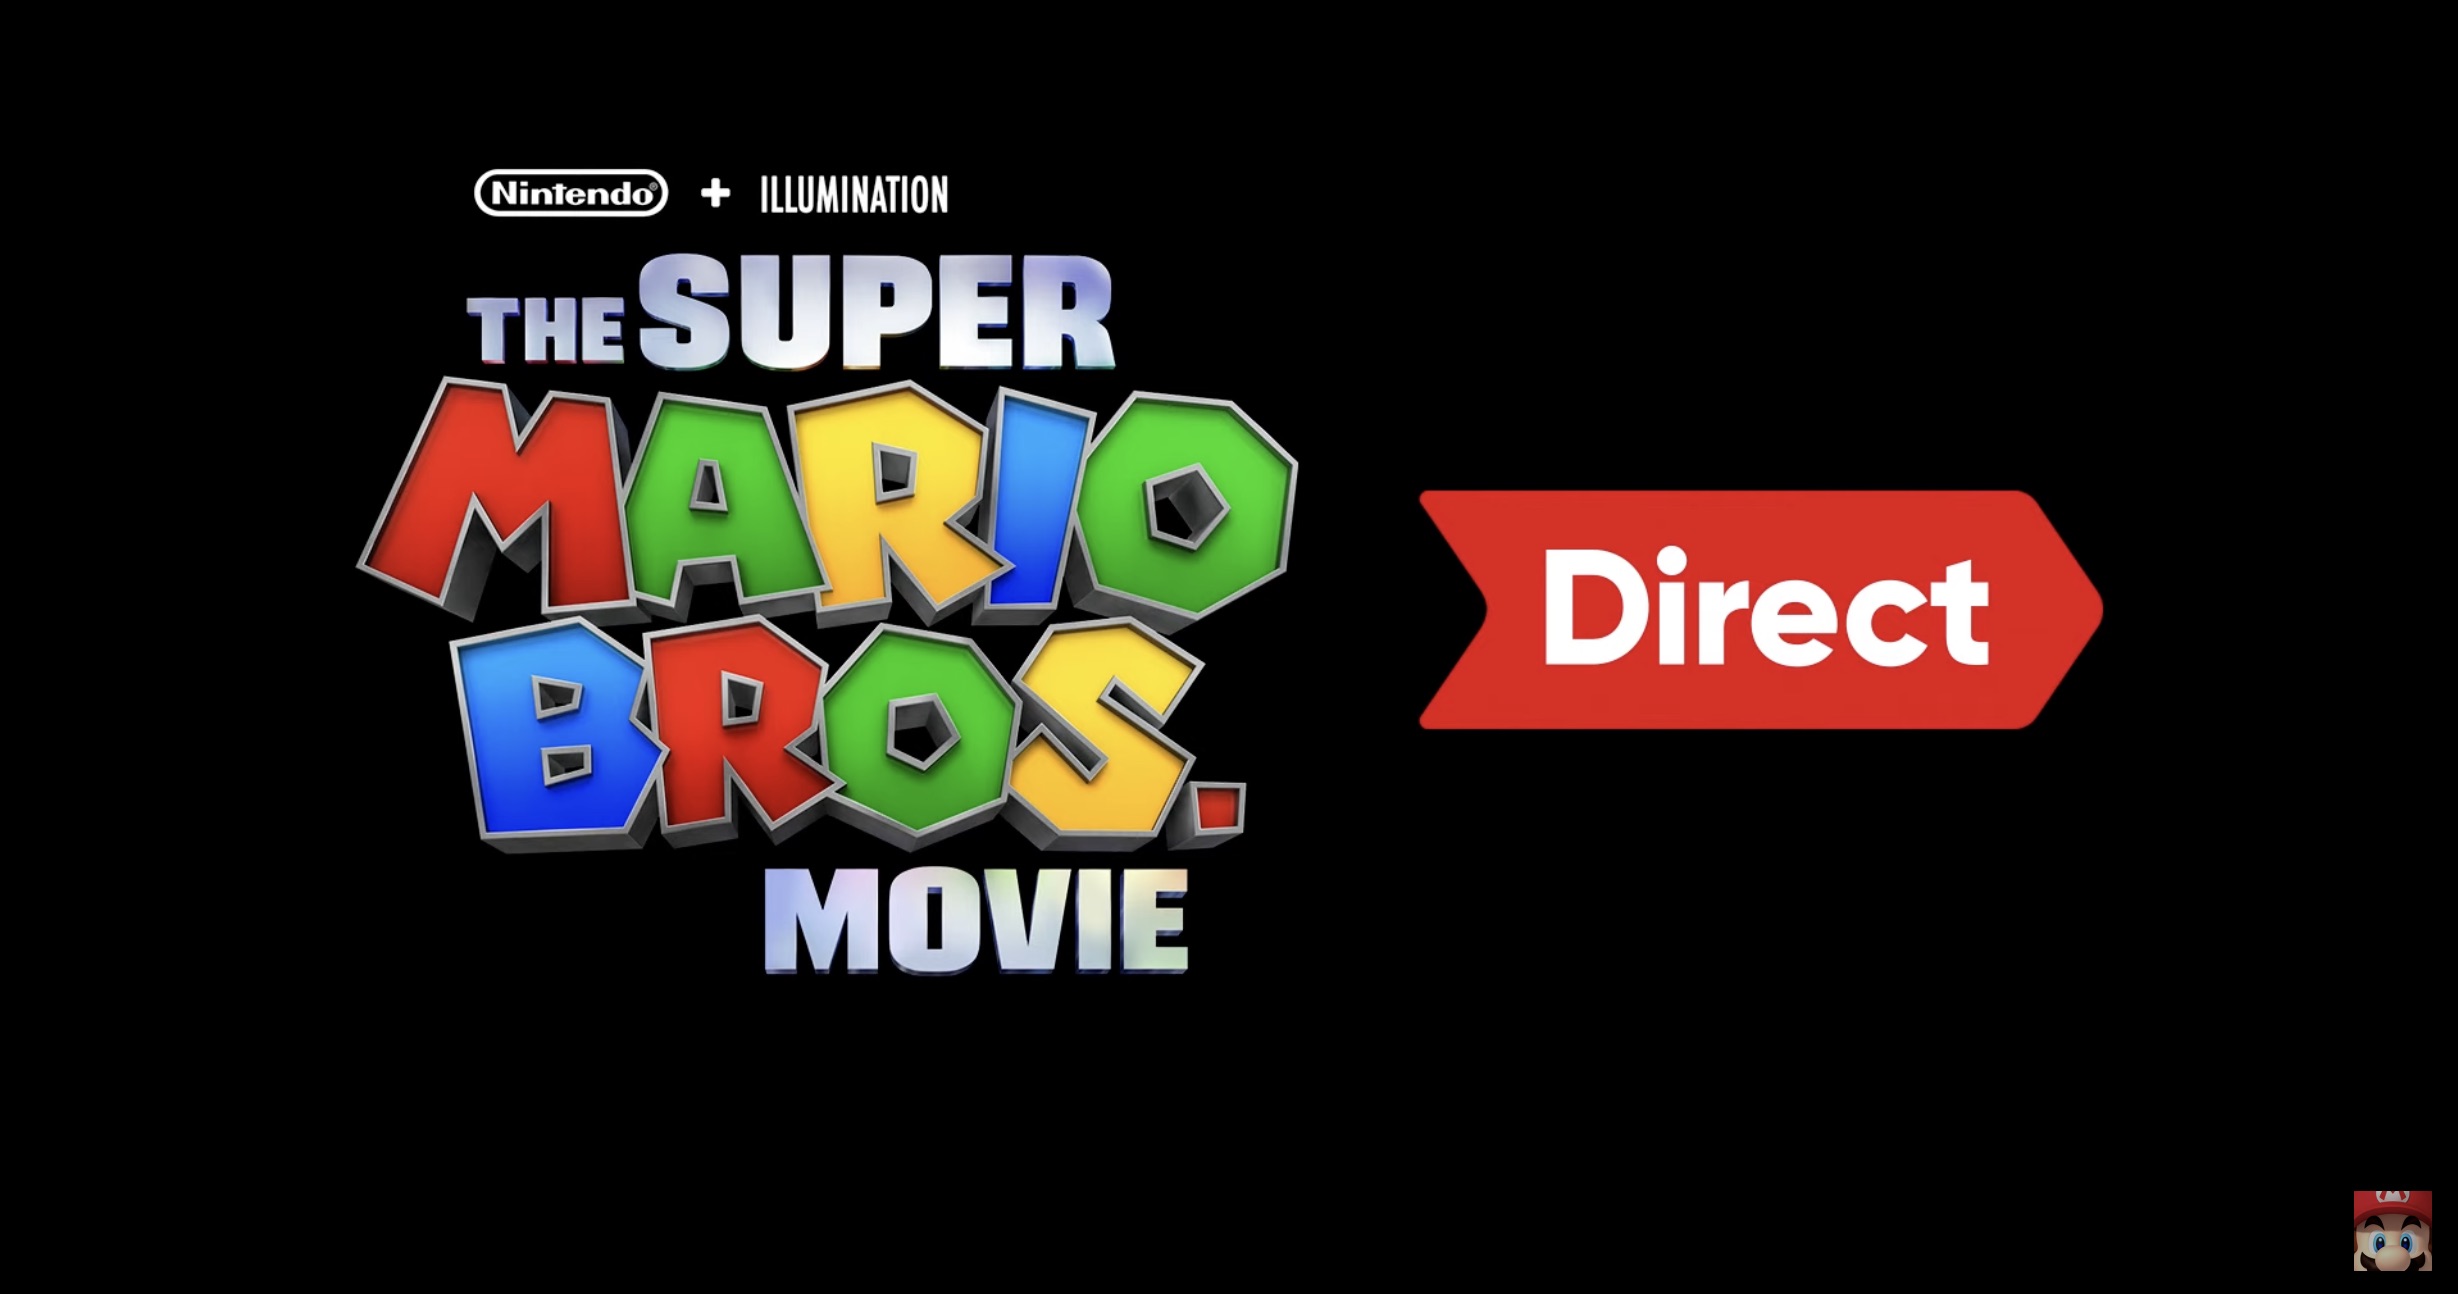 'The Super Mario Bros. Movie' trailer is finally here